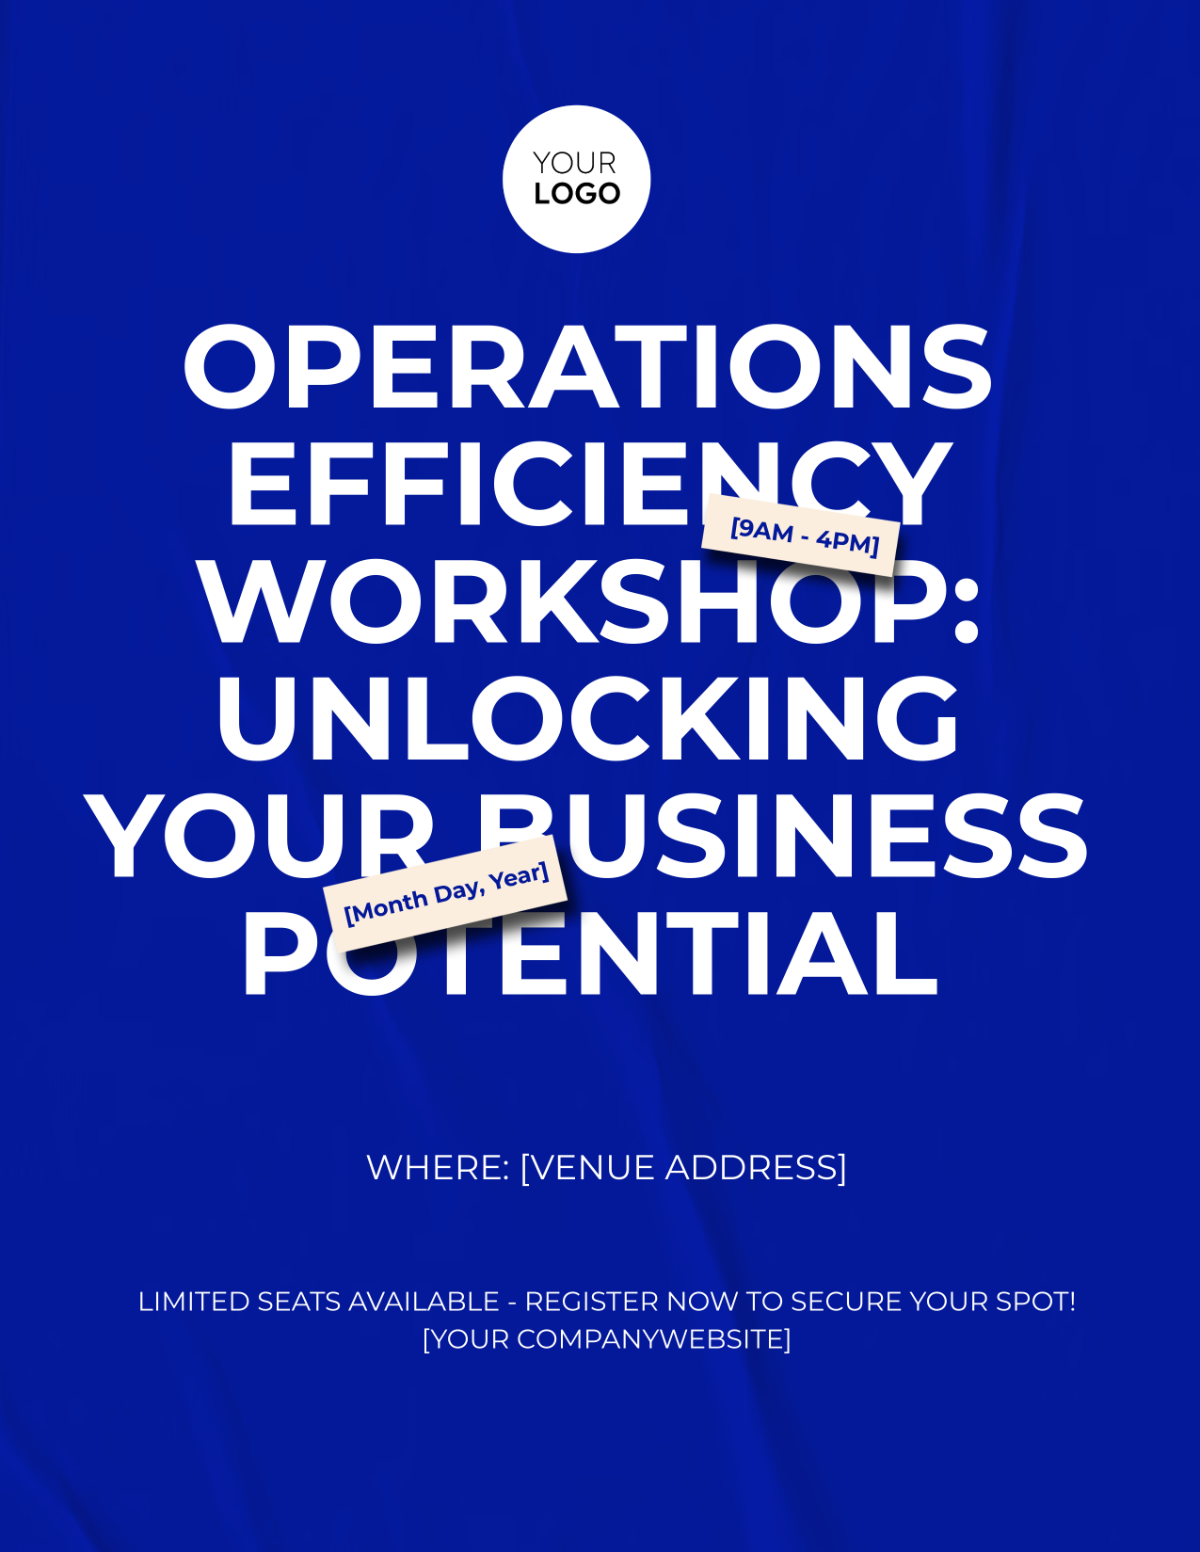 Operations Efficiency Workshop Flyer